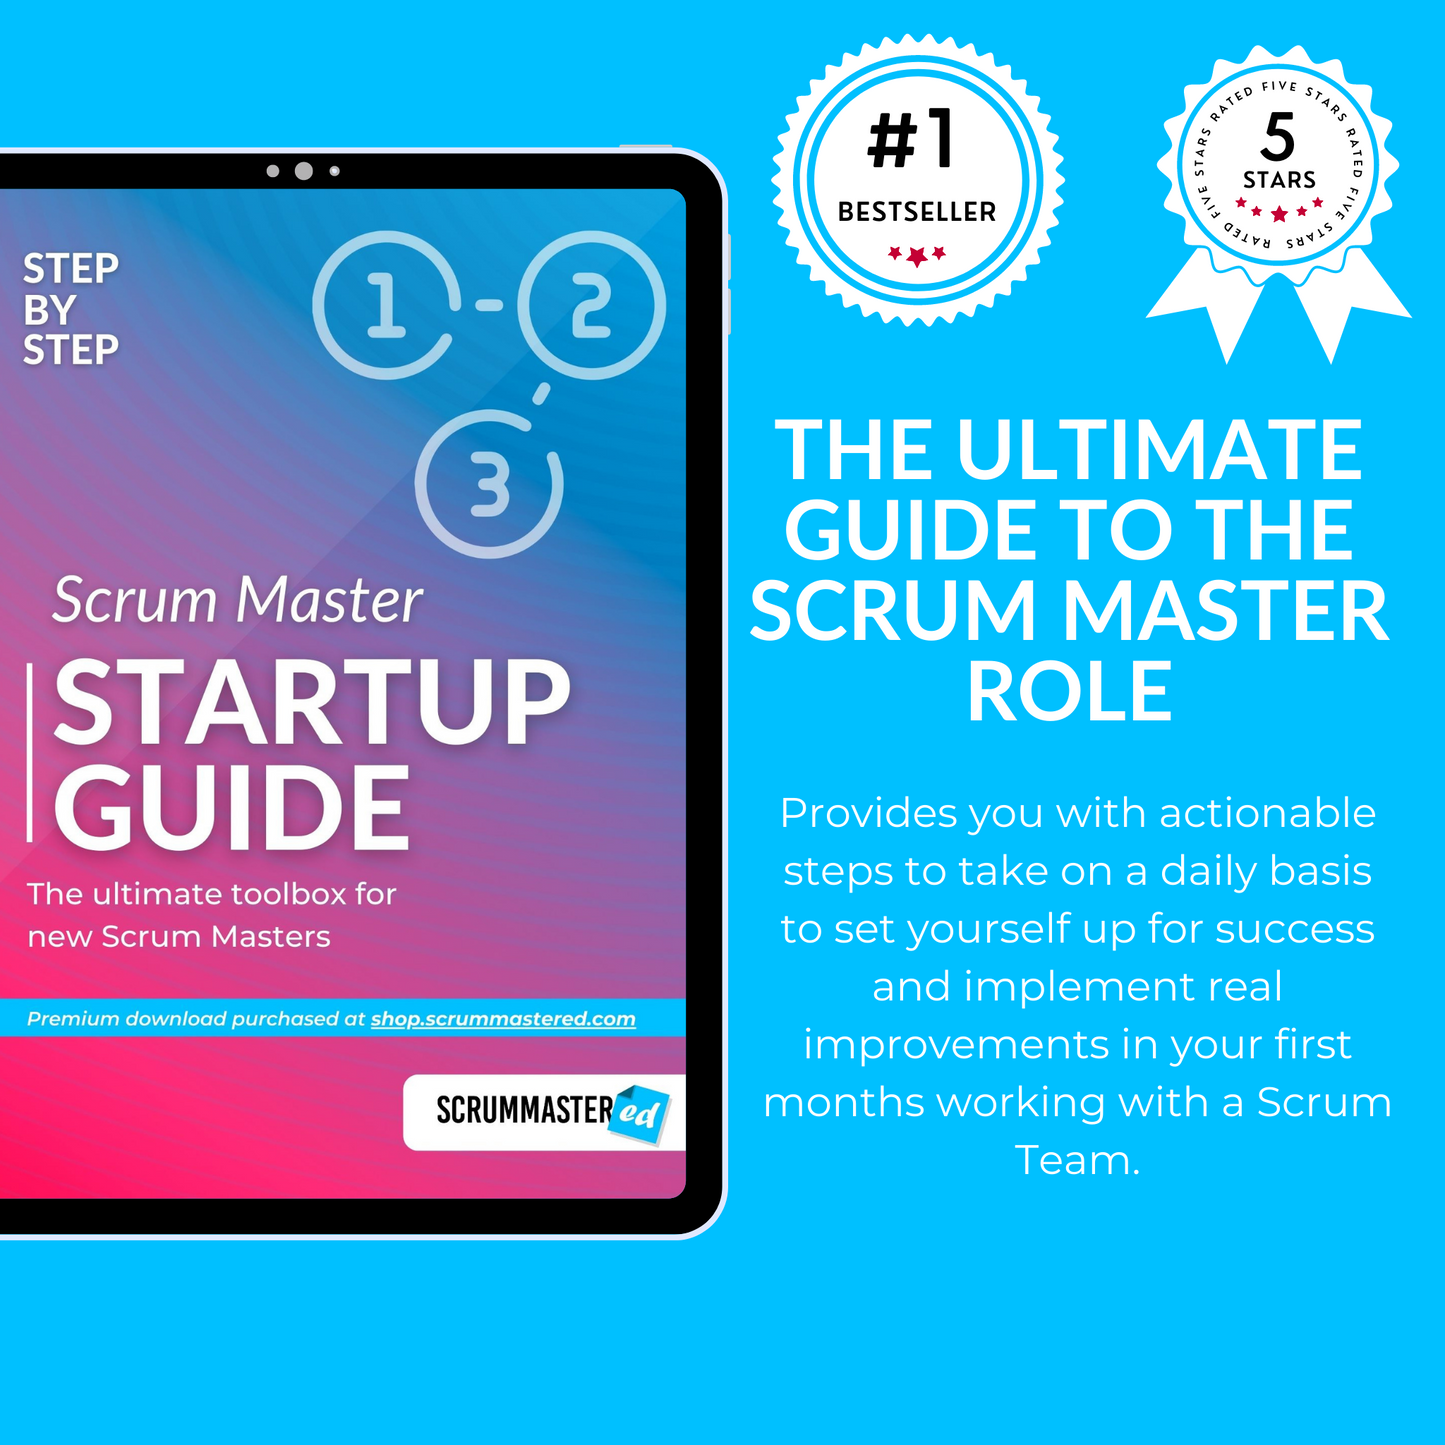 Scrum Master Startup Guide